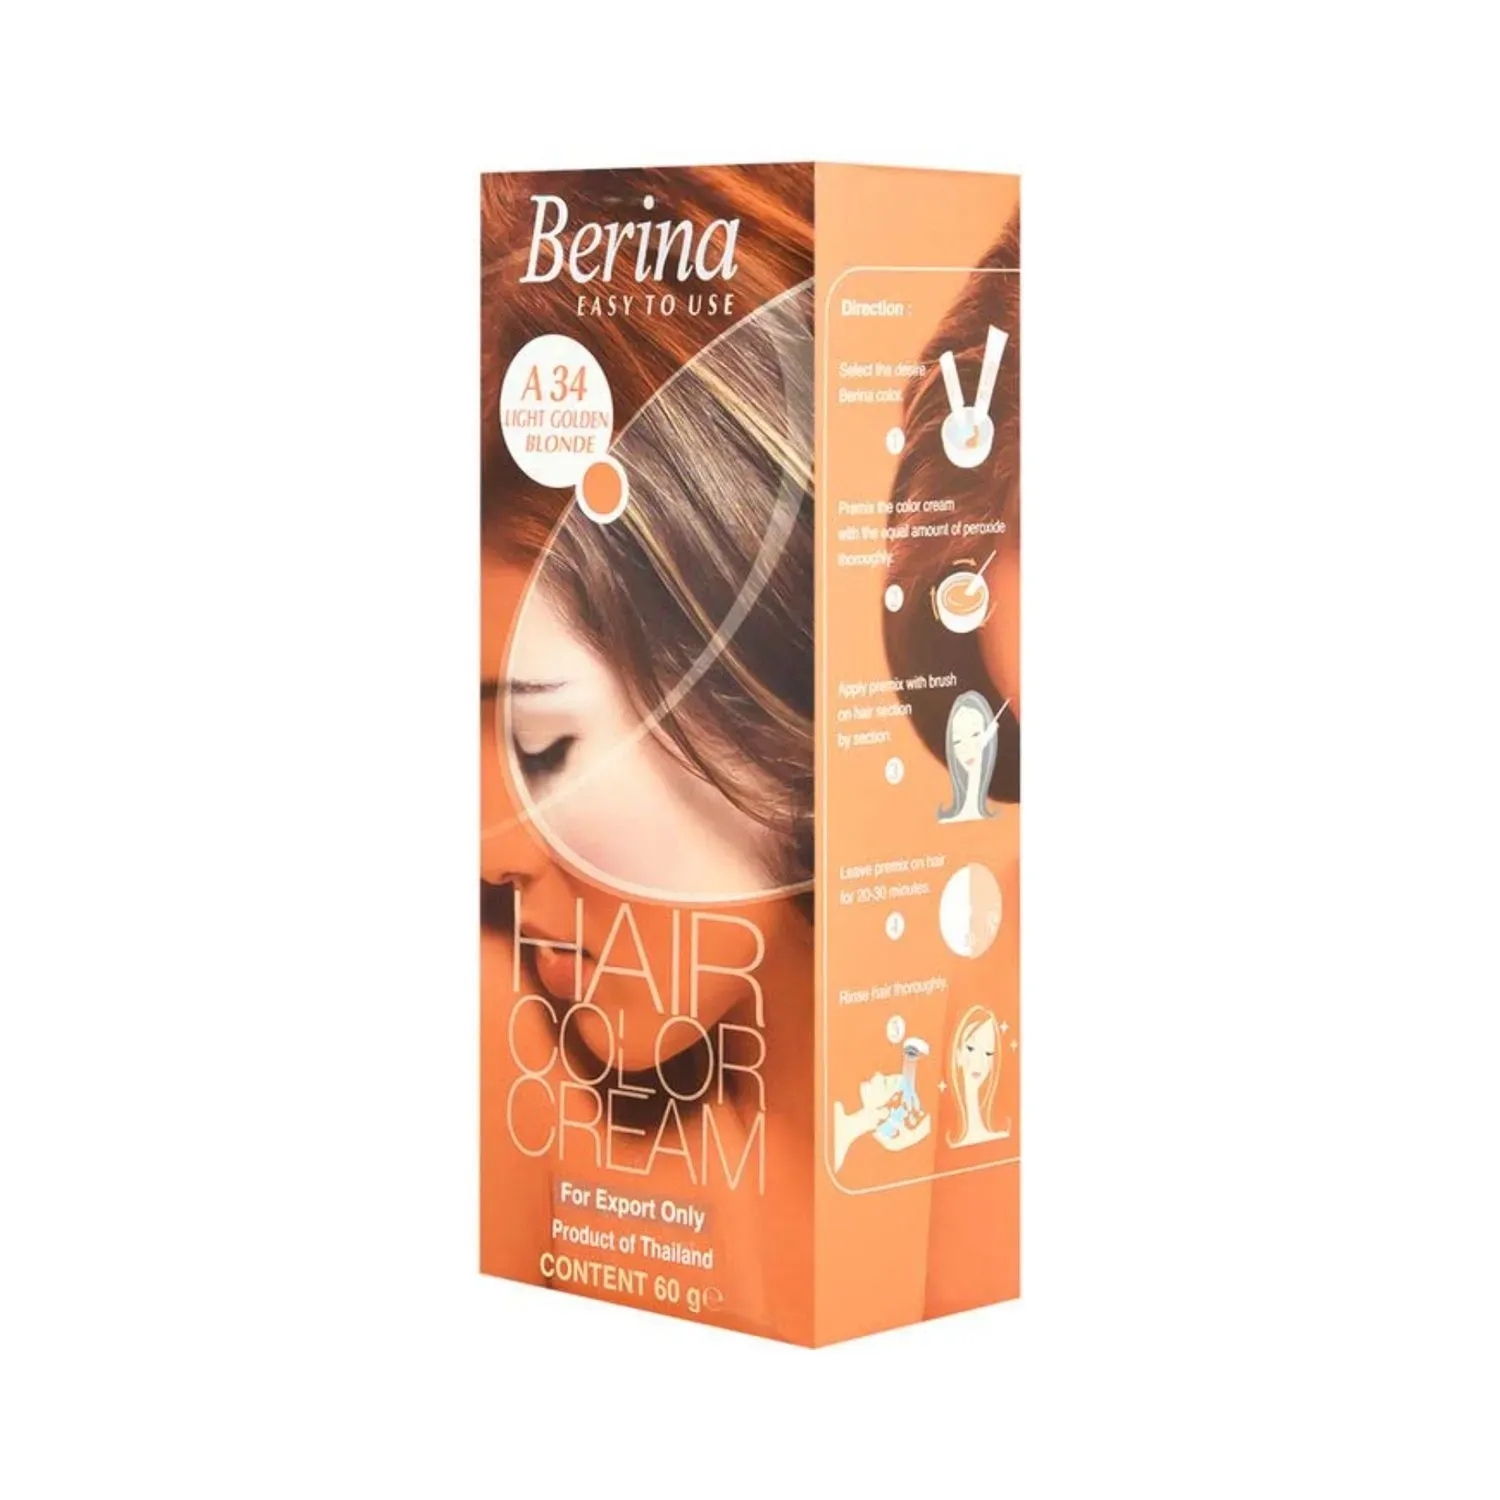 Berina | Berina Cream Hair Color - A34 Light Golden Blonde (60g)